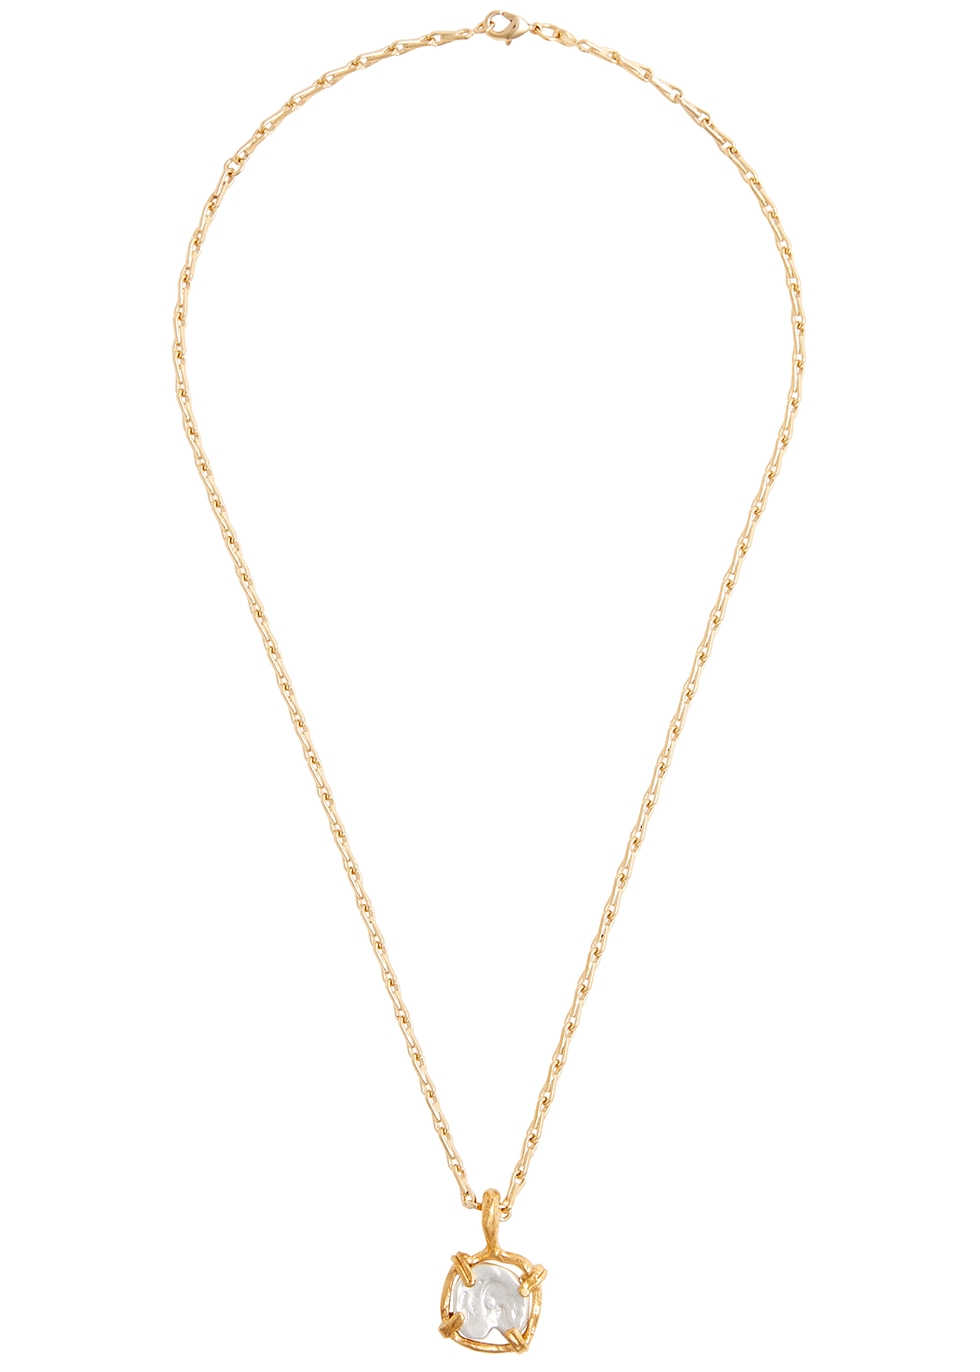 Alighieri The Gilded Frame 24kt gold-plated necklace - Harvey Nichols